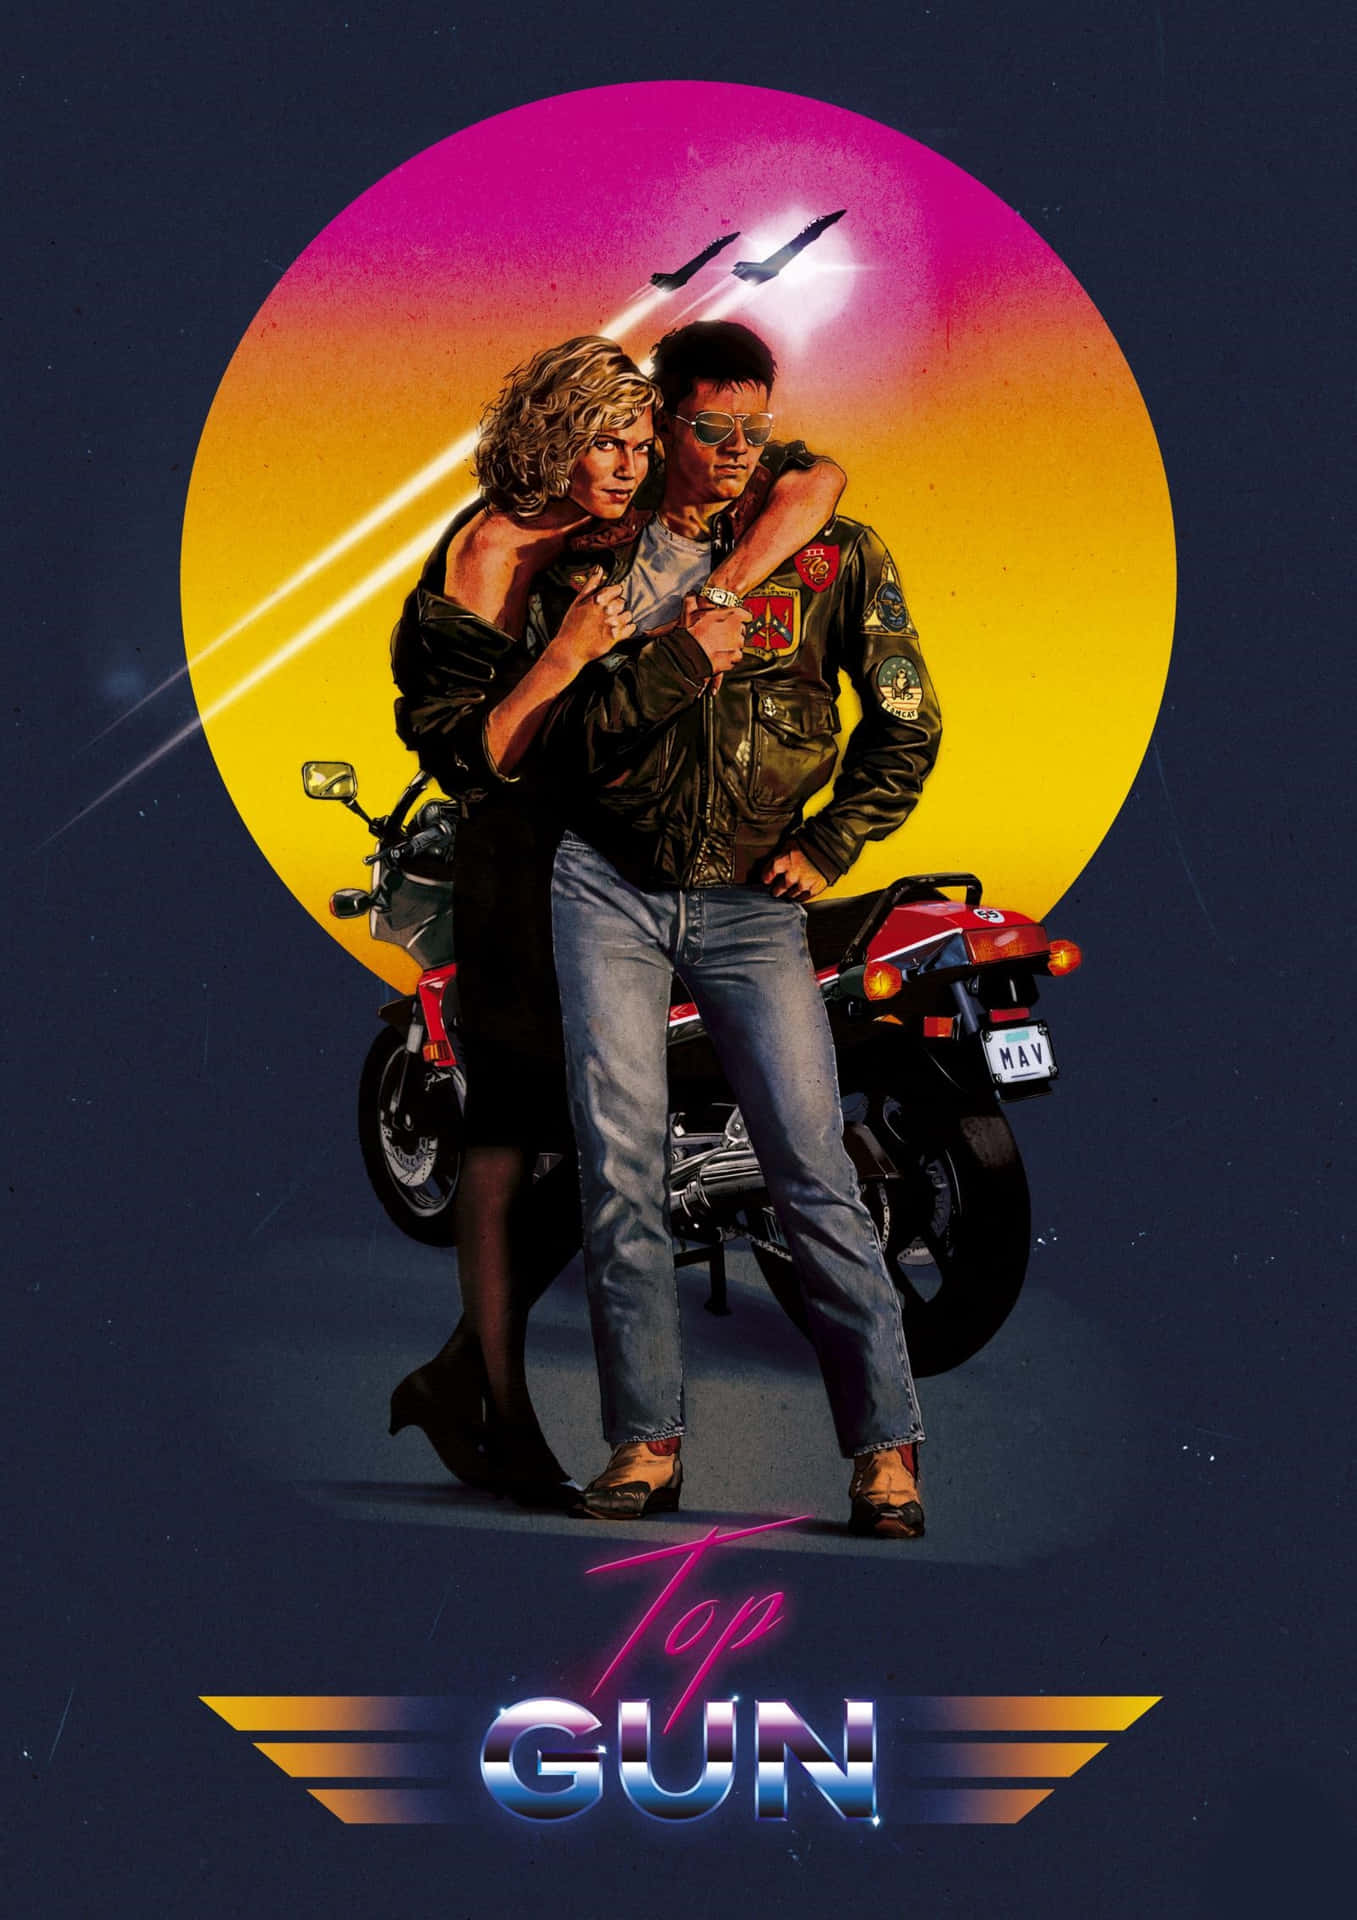 Top Gun Retro-style Movie Poster Background